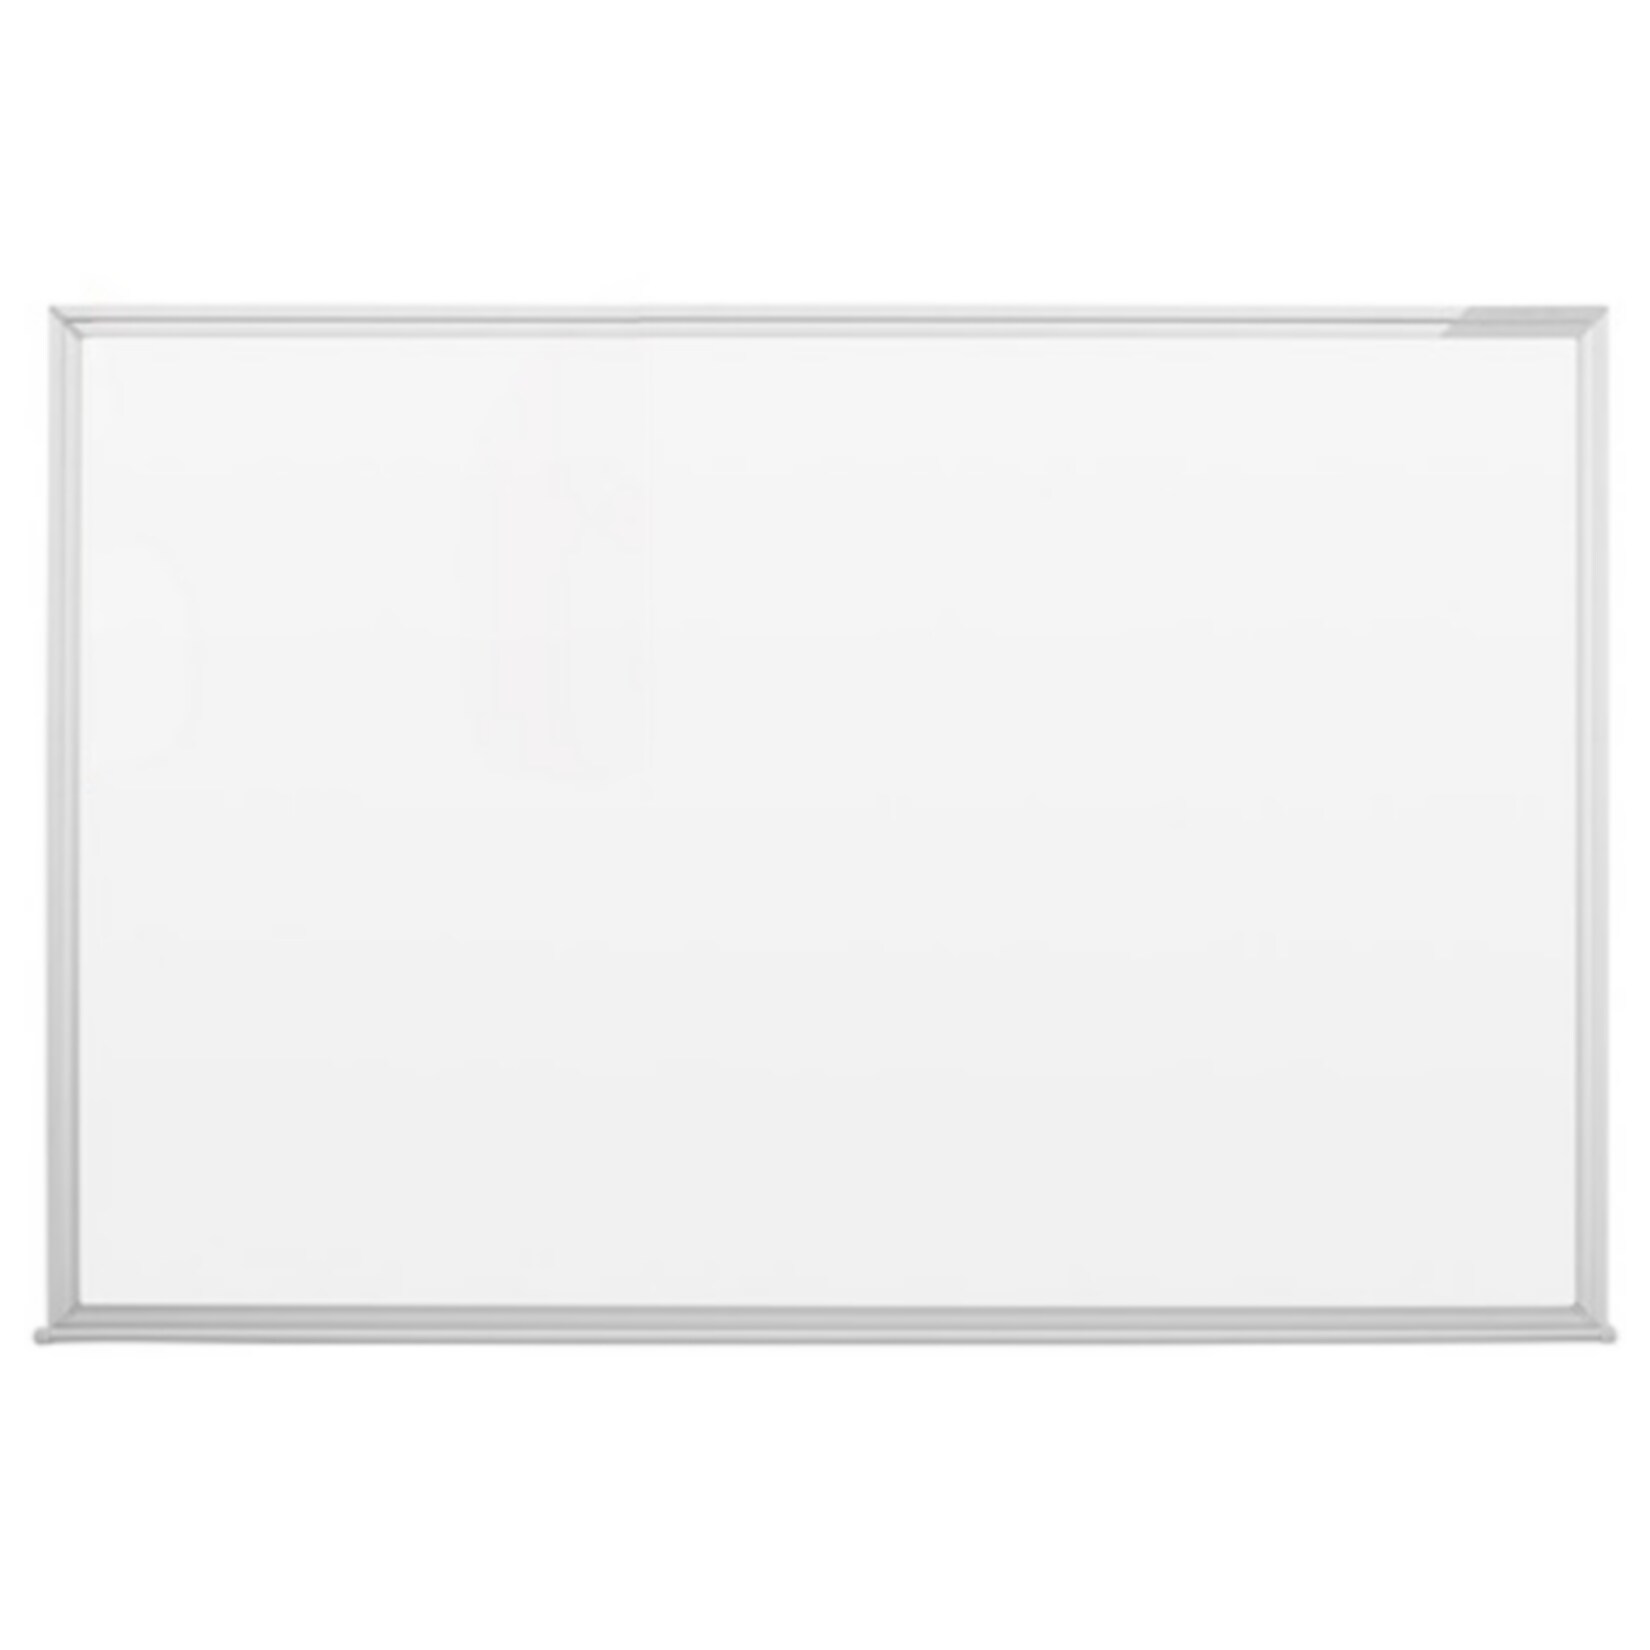 magnetoplan Design-Whiteboard SP 2400 x 1200 mm